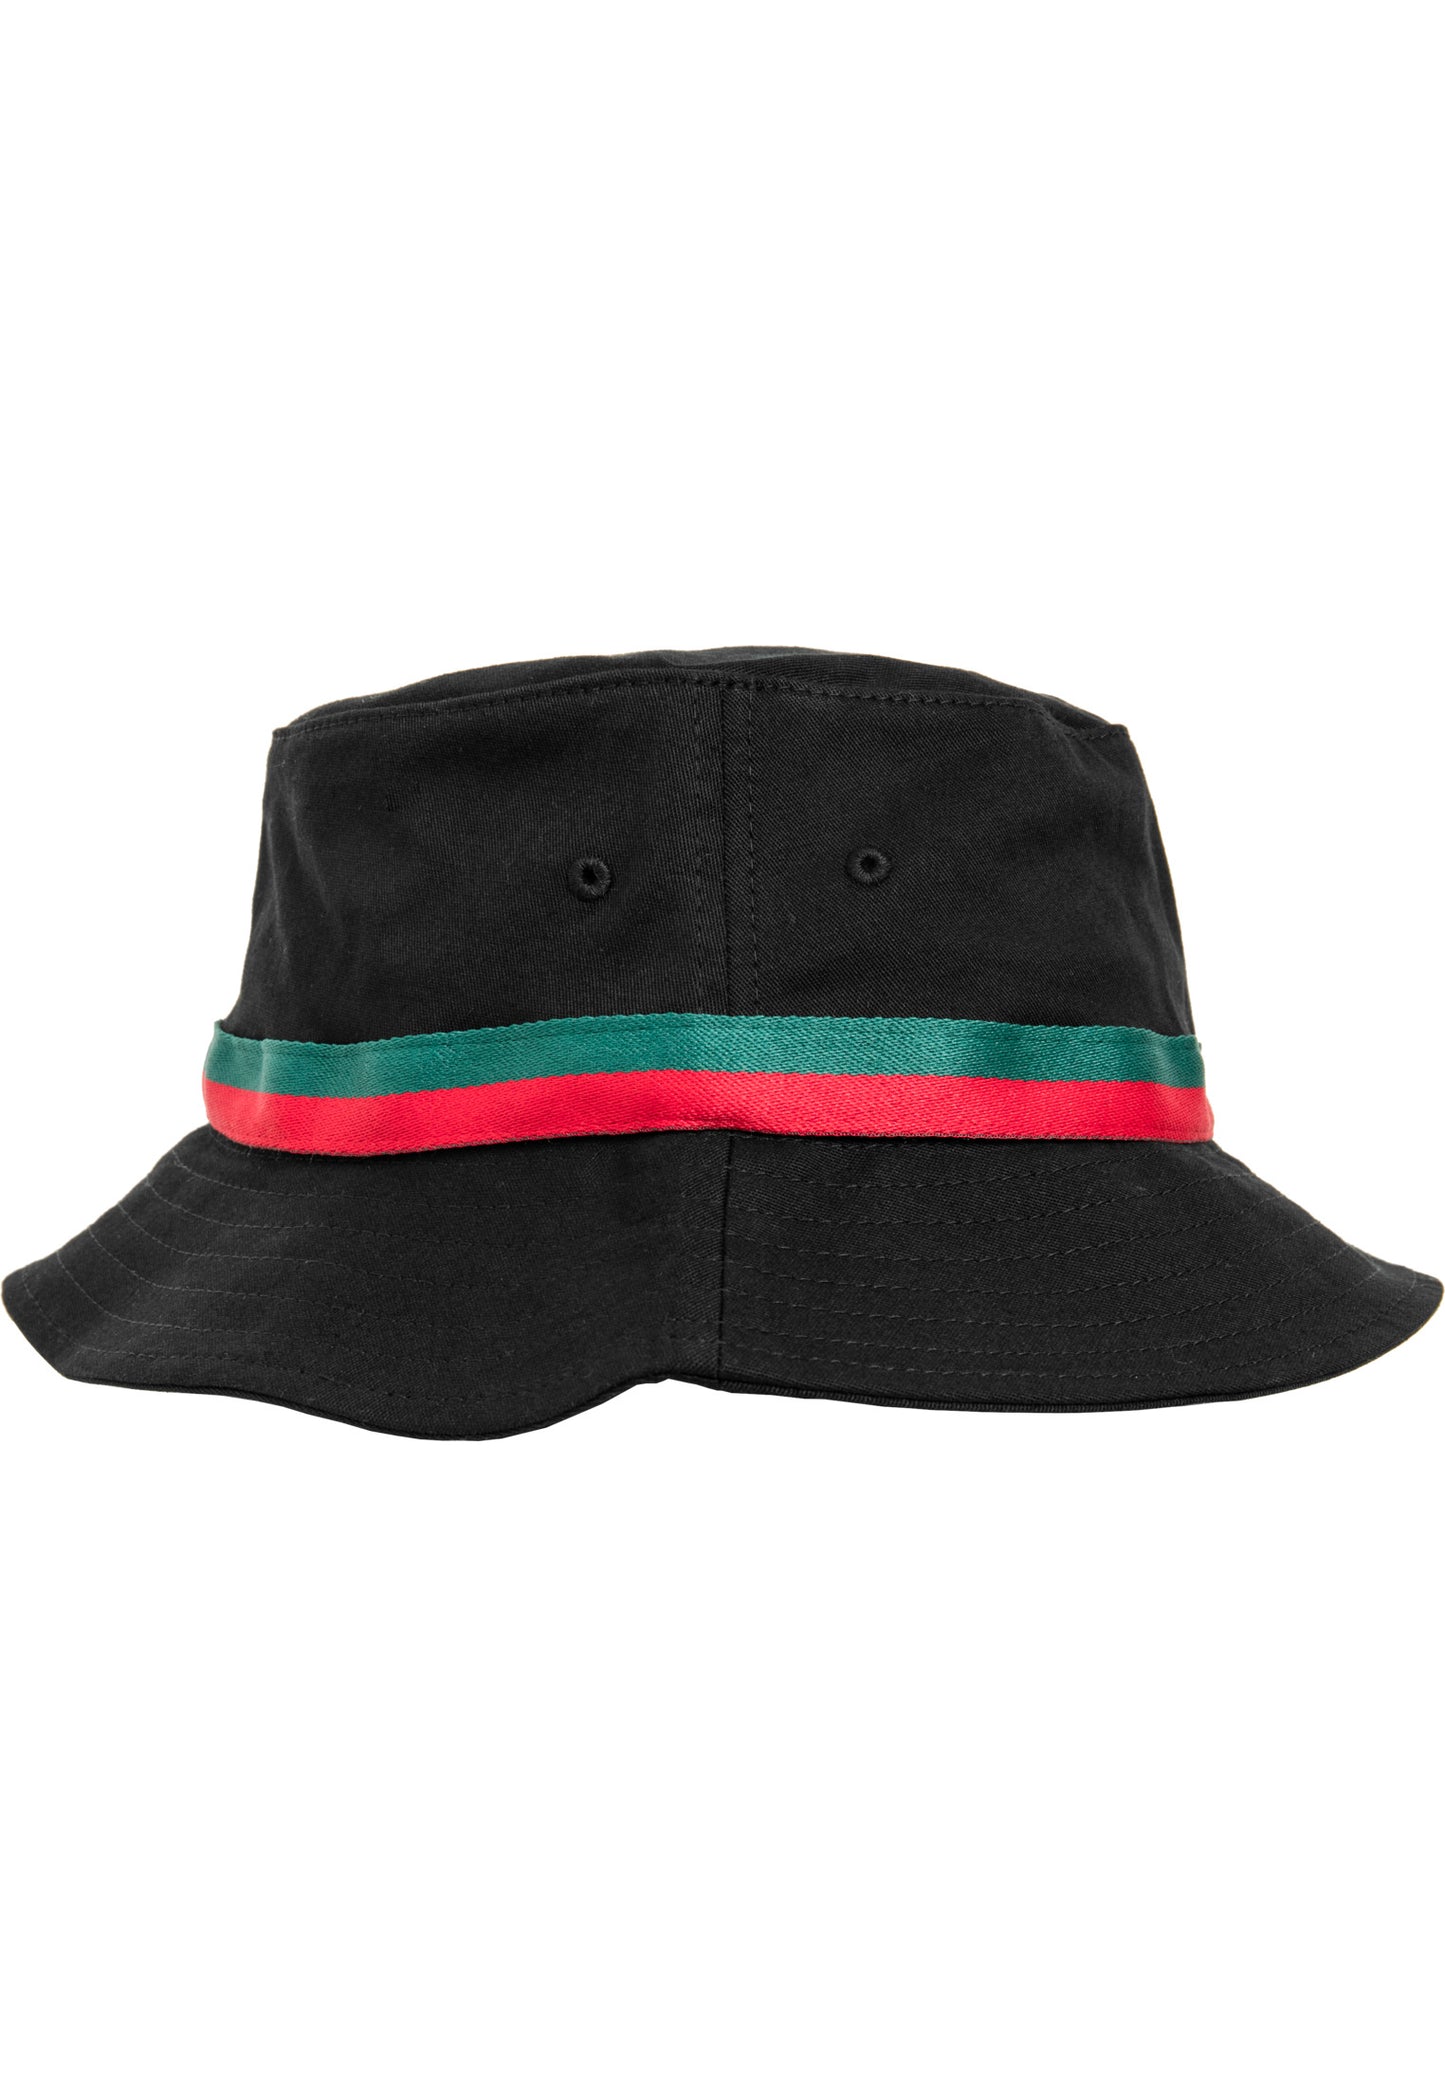 Stripe Bucket Hat - Black/Firered/Green - Headz Up 